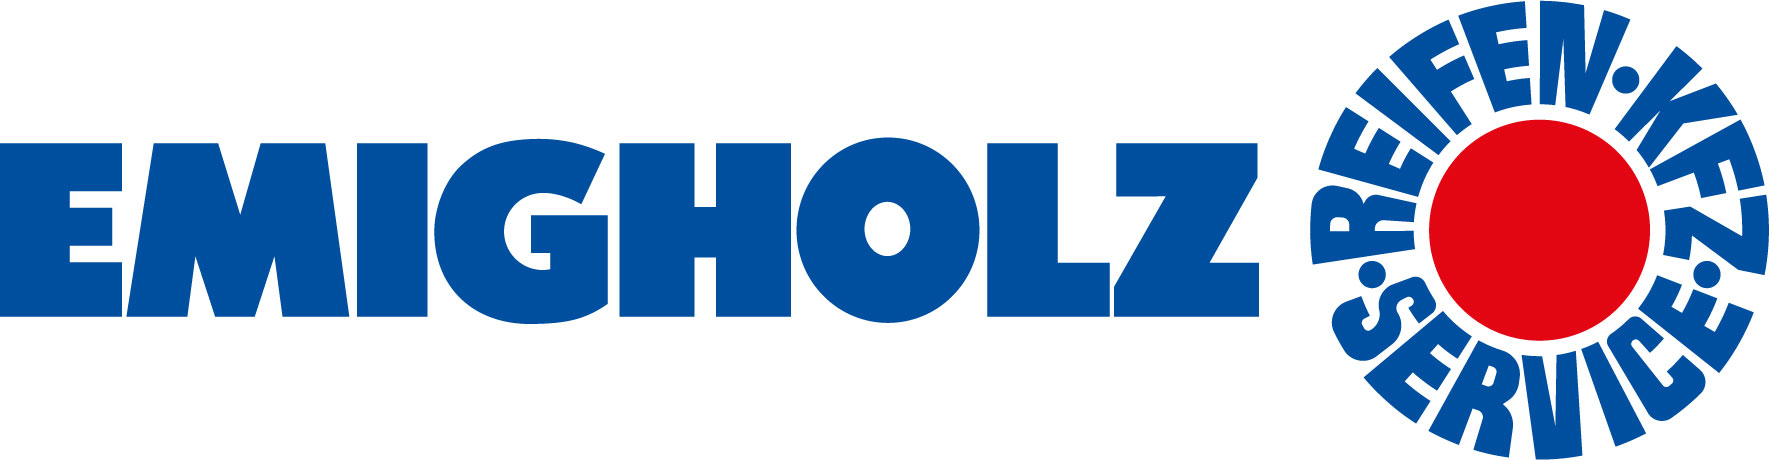 EMIGHOLZ GmbH Horn-Lehe